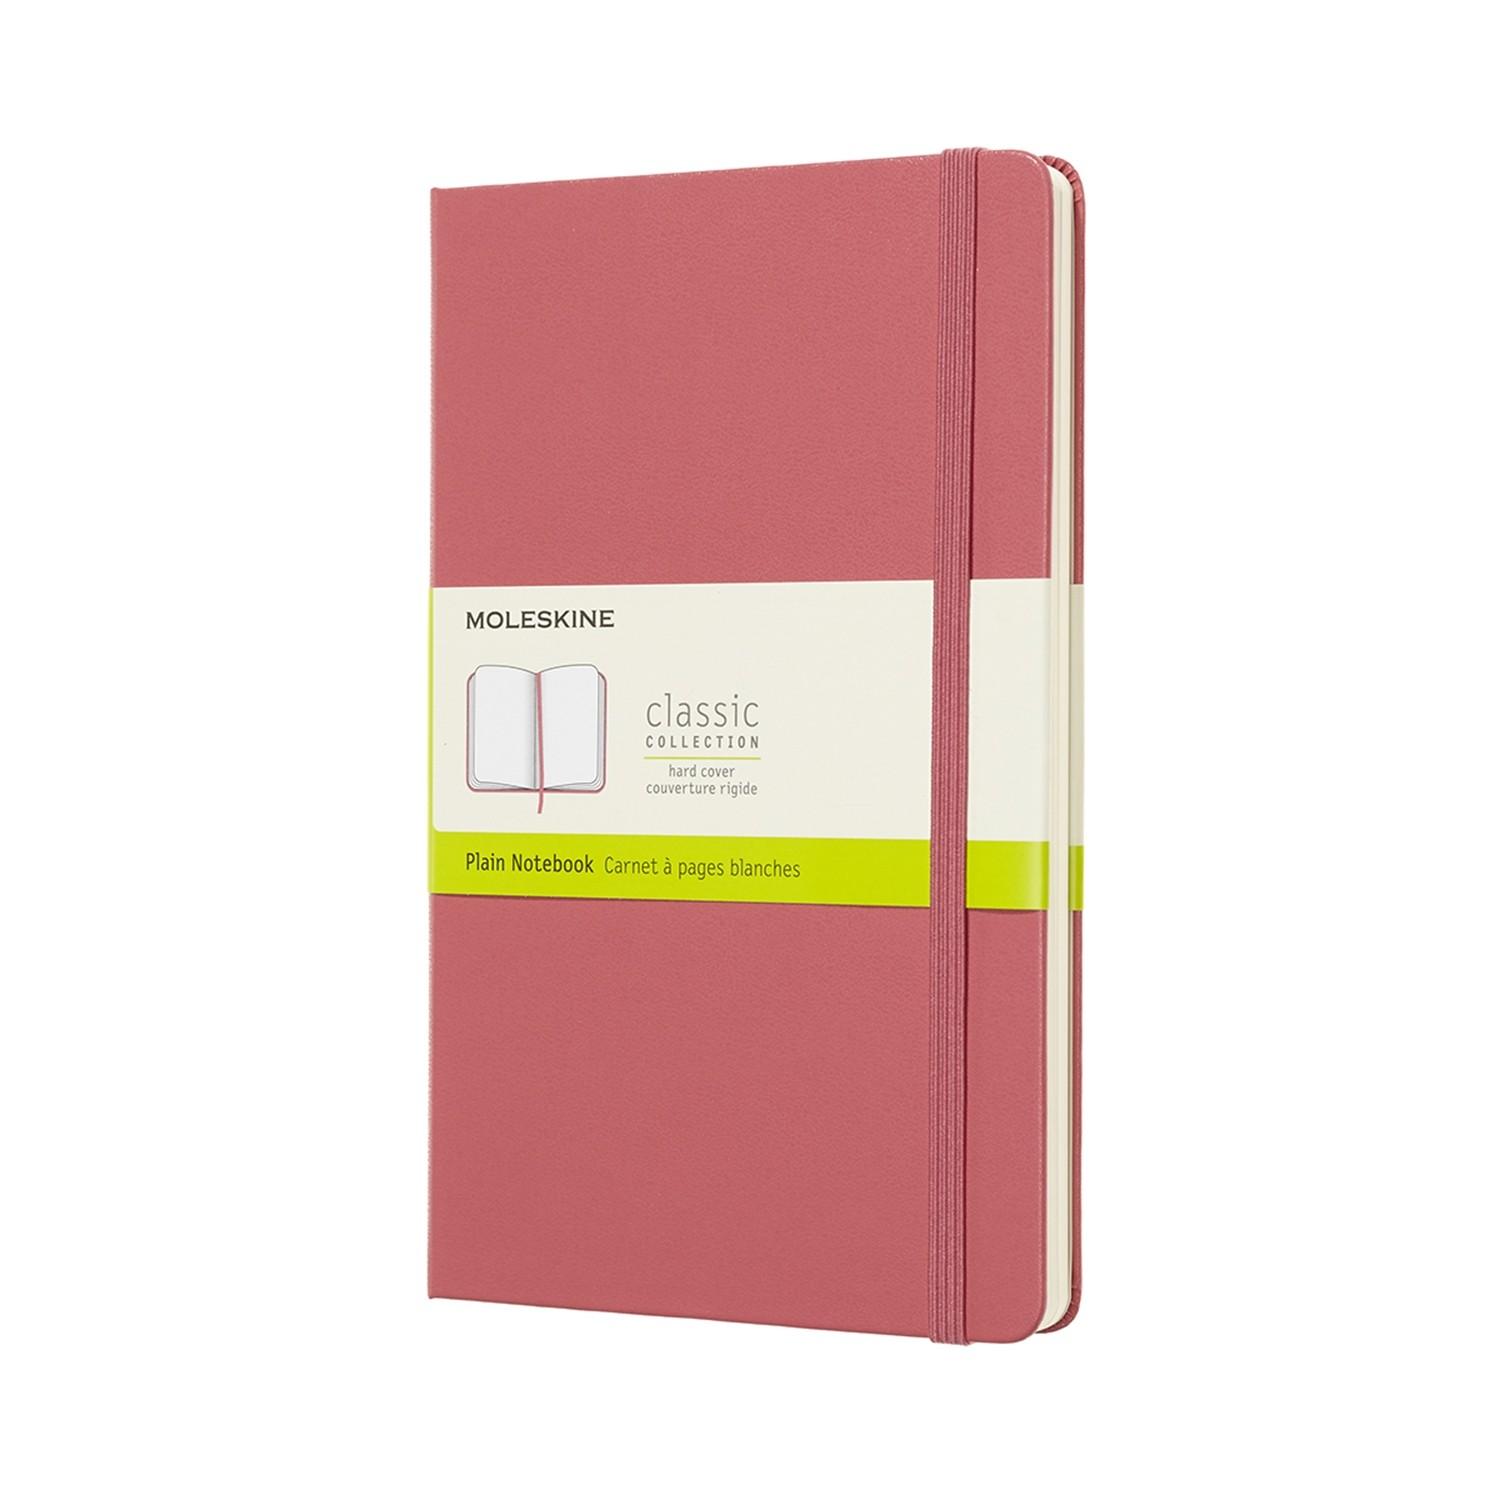 Moleskine Notebook Large Plain Daisy Pink Hard CovER